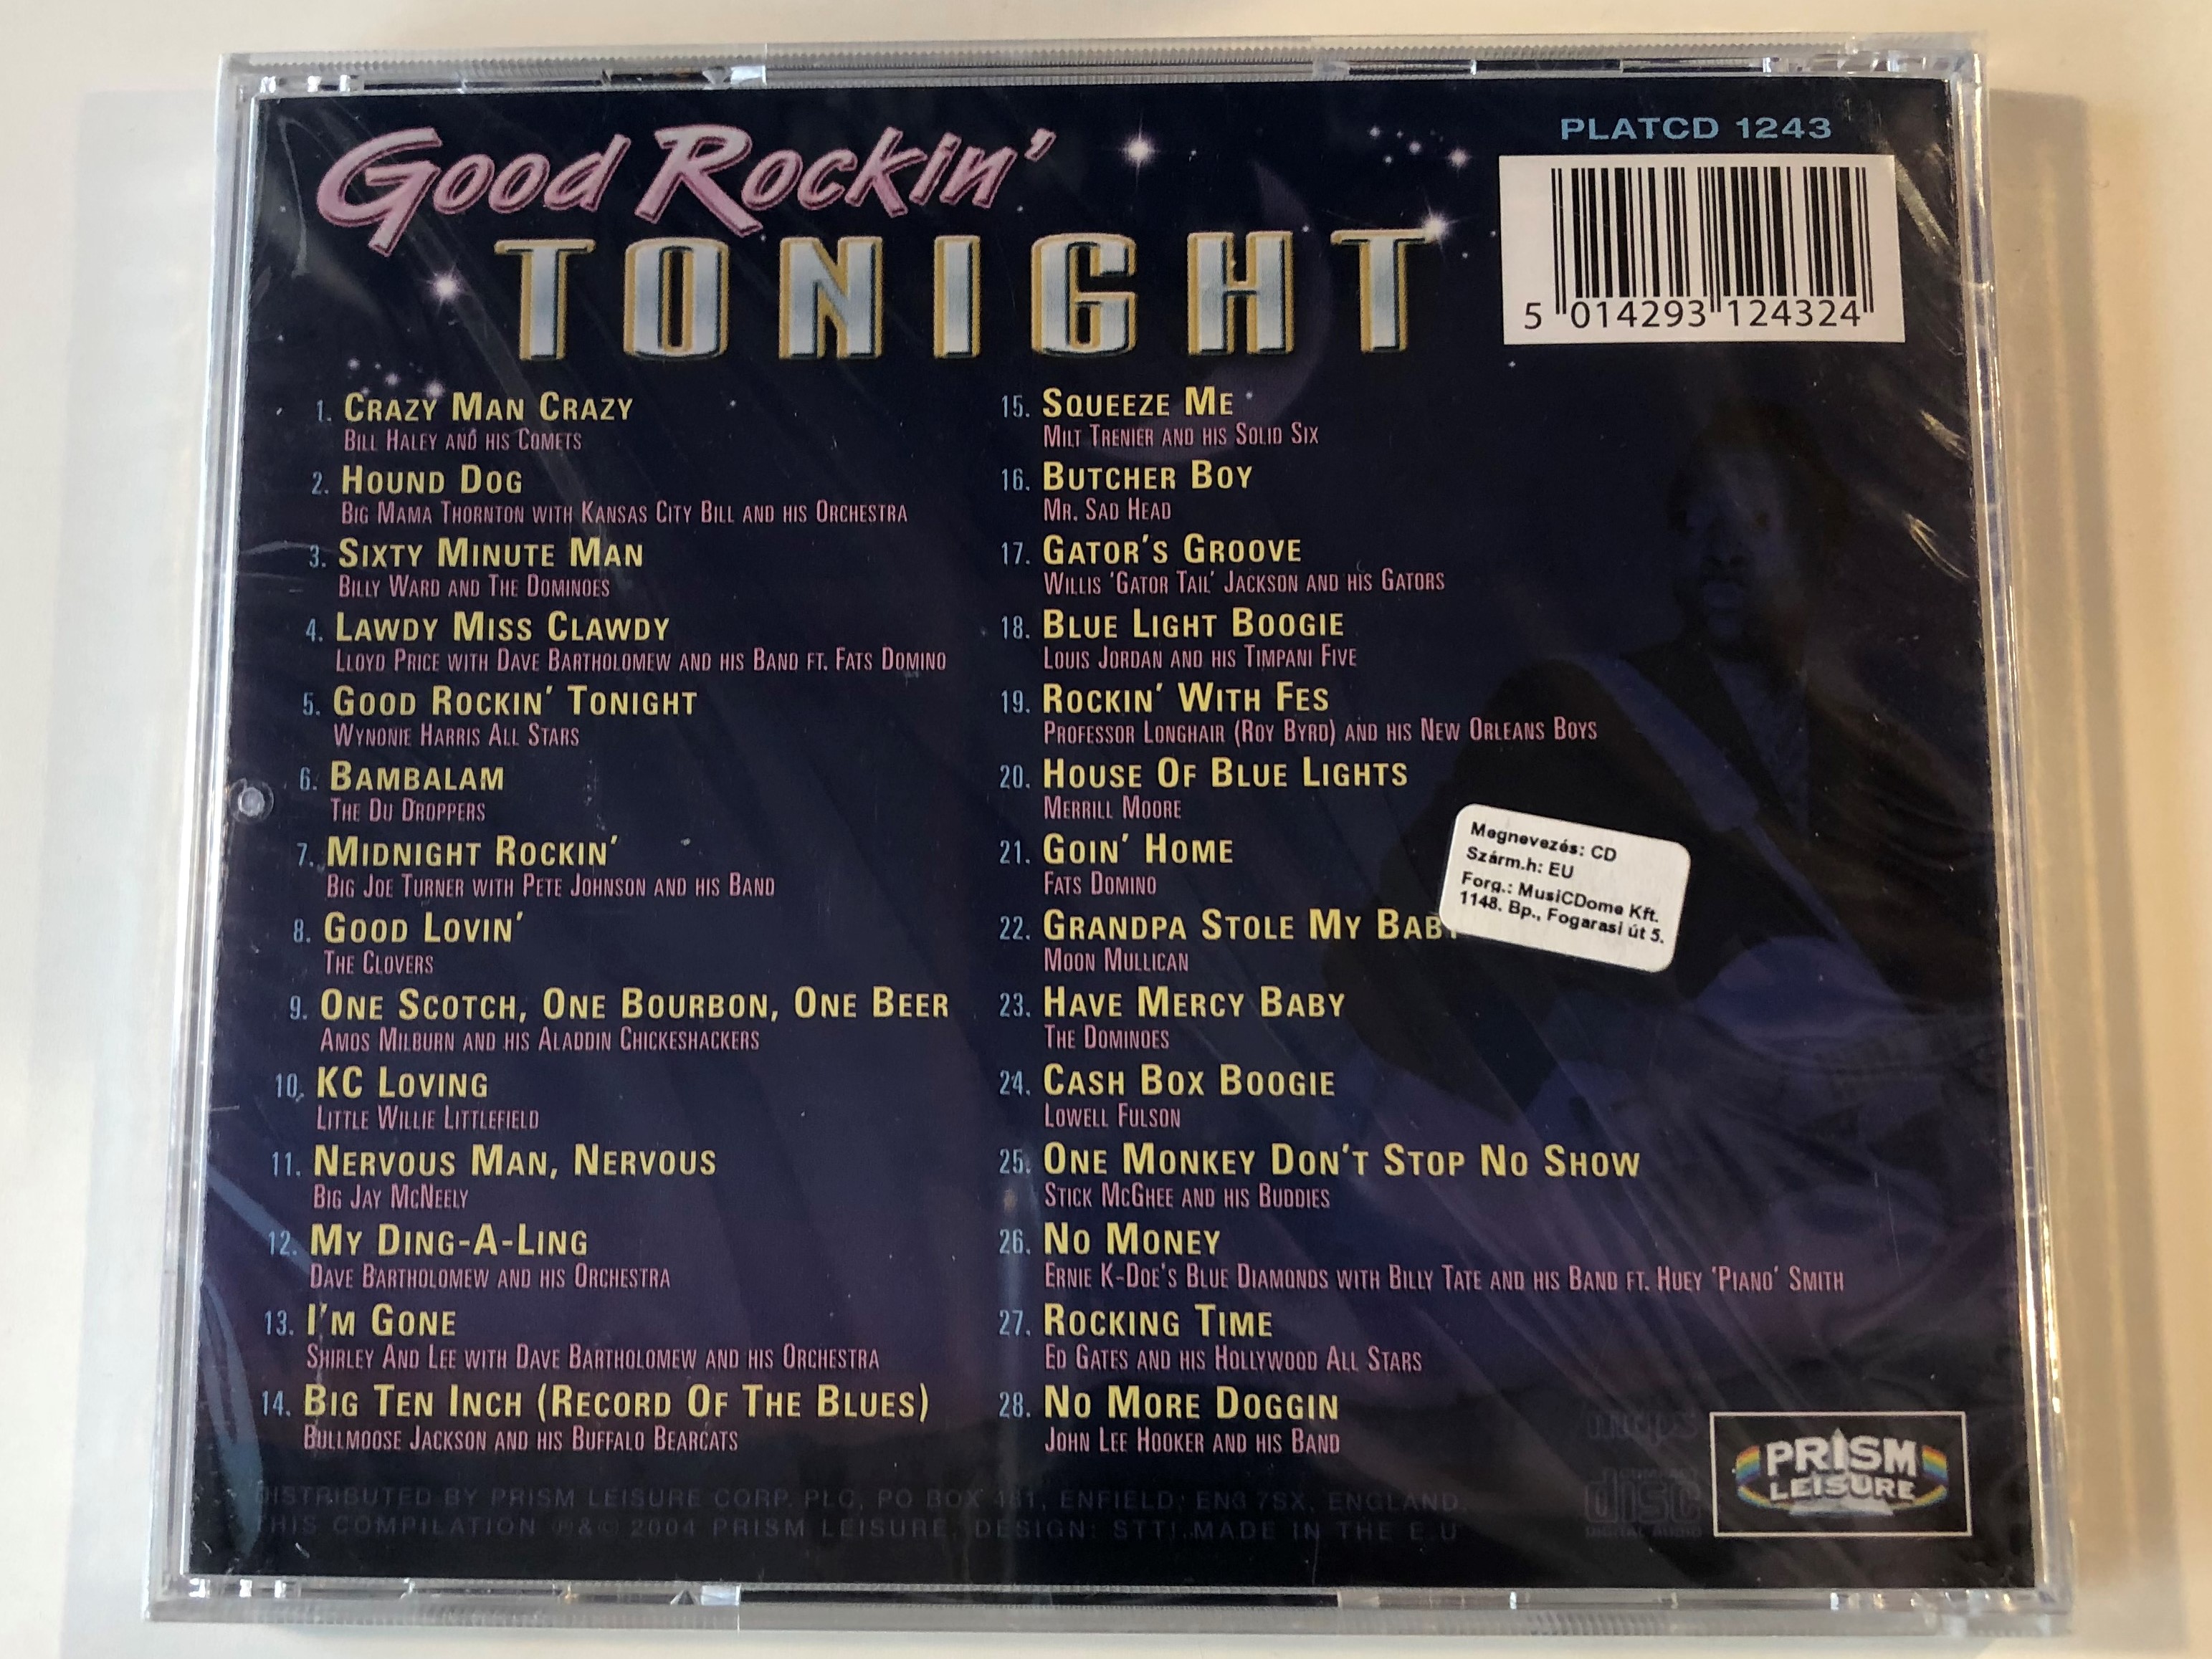 good-rockin-tonight-28-original-rock-n-roll-hits-featuring-bill-haley-fats-domino-little-richard-louis-jordan-john-lee-hooker-prism-leisure-audio-cd-2004-platcd1243-2-.jpg